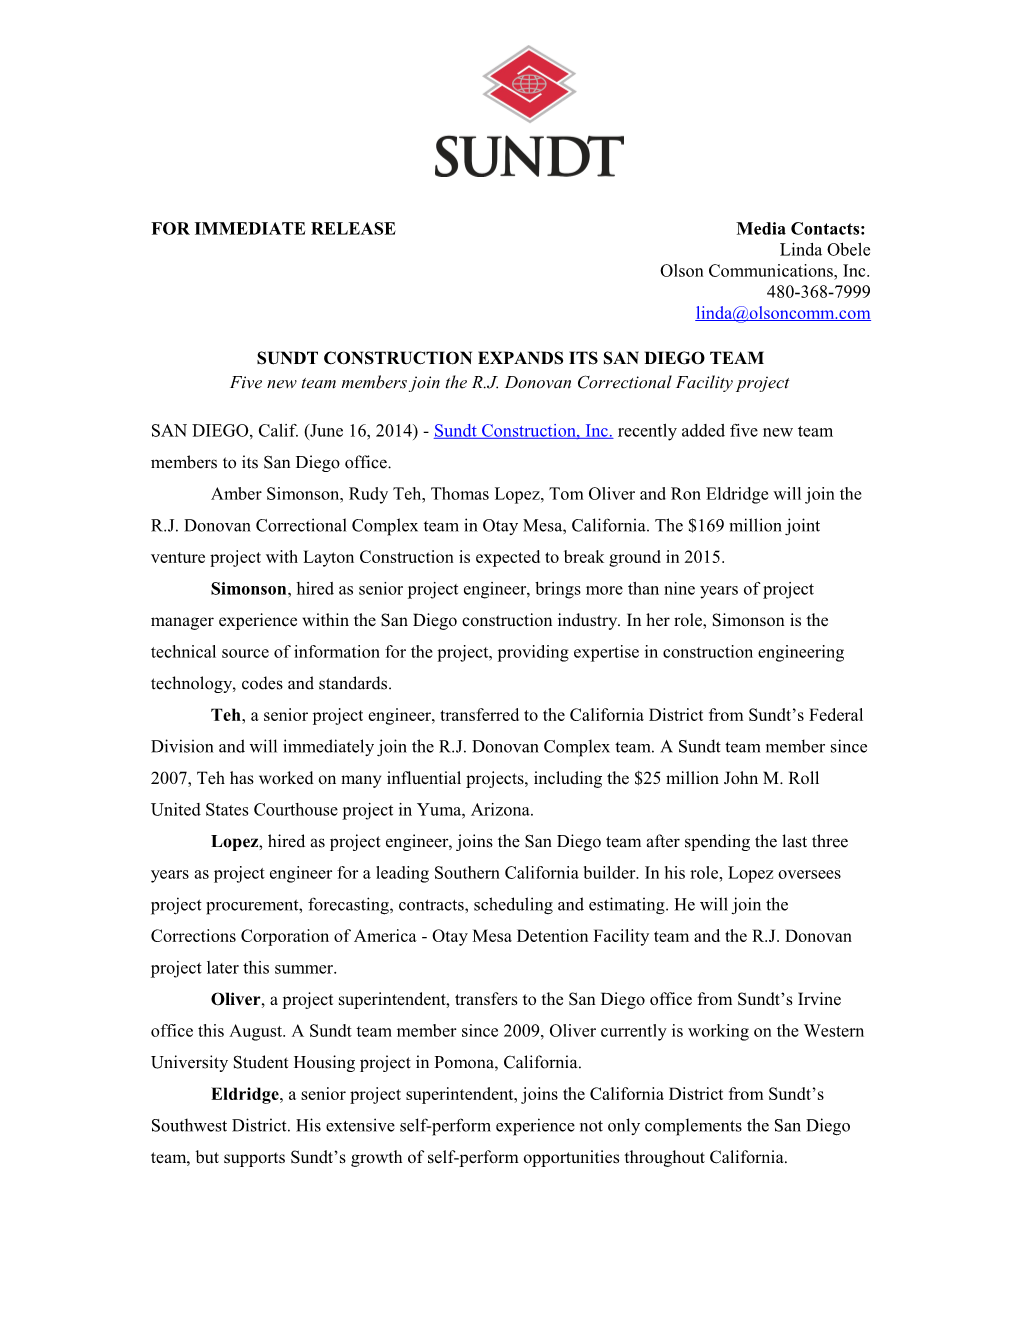 Sundt Construction Expandsits San Diego Team